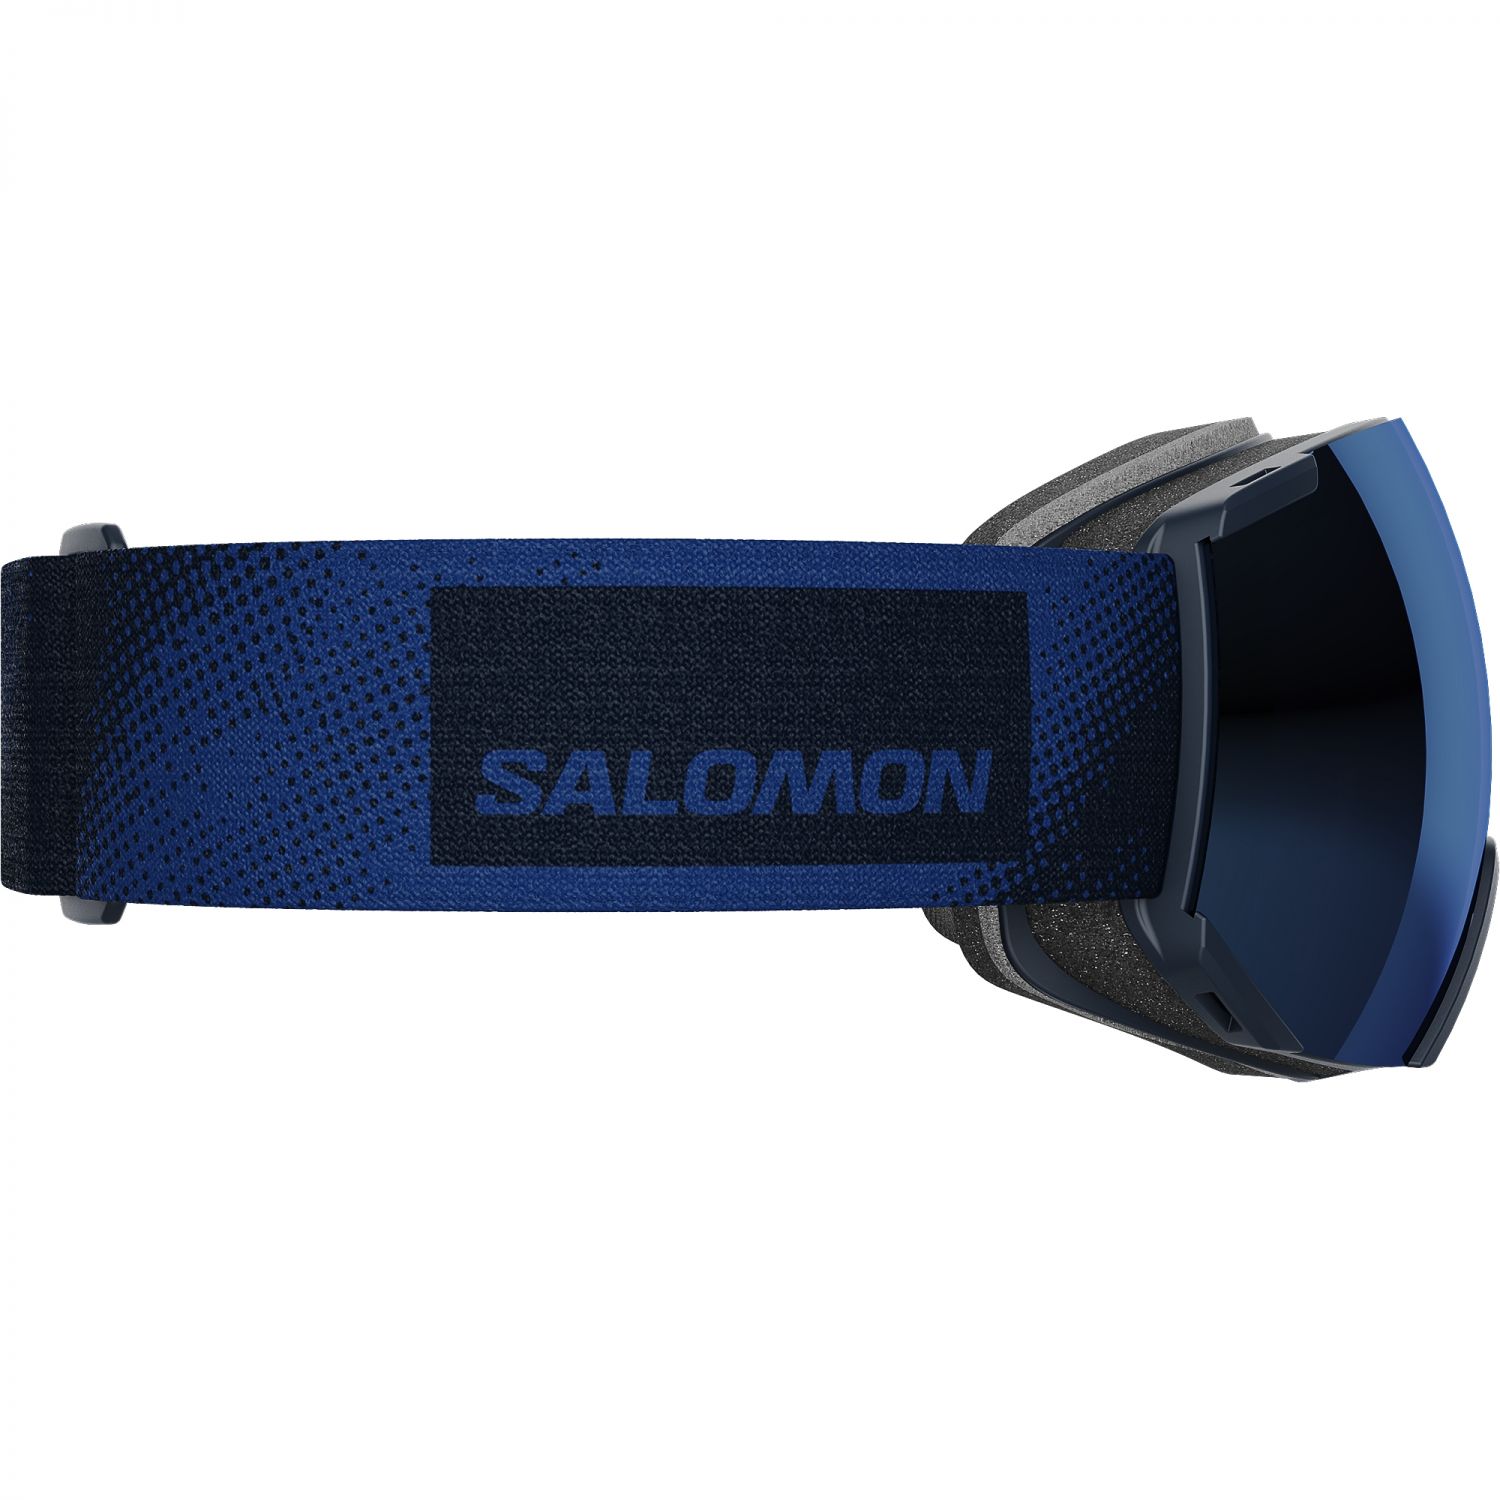 Salomon Radium Sigma, masque de ski, bleu